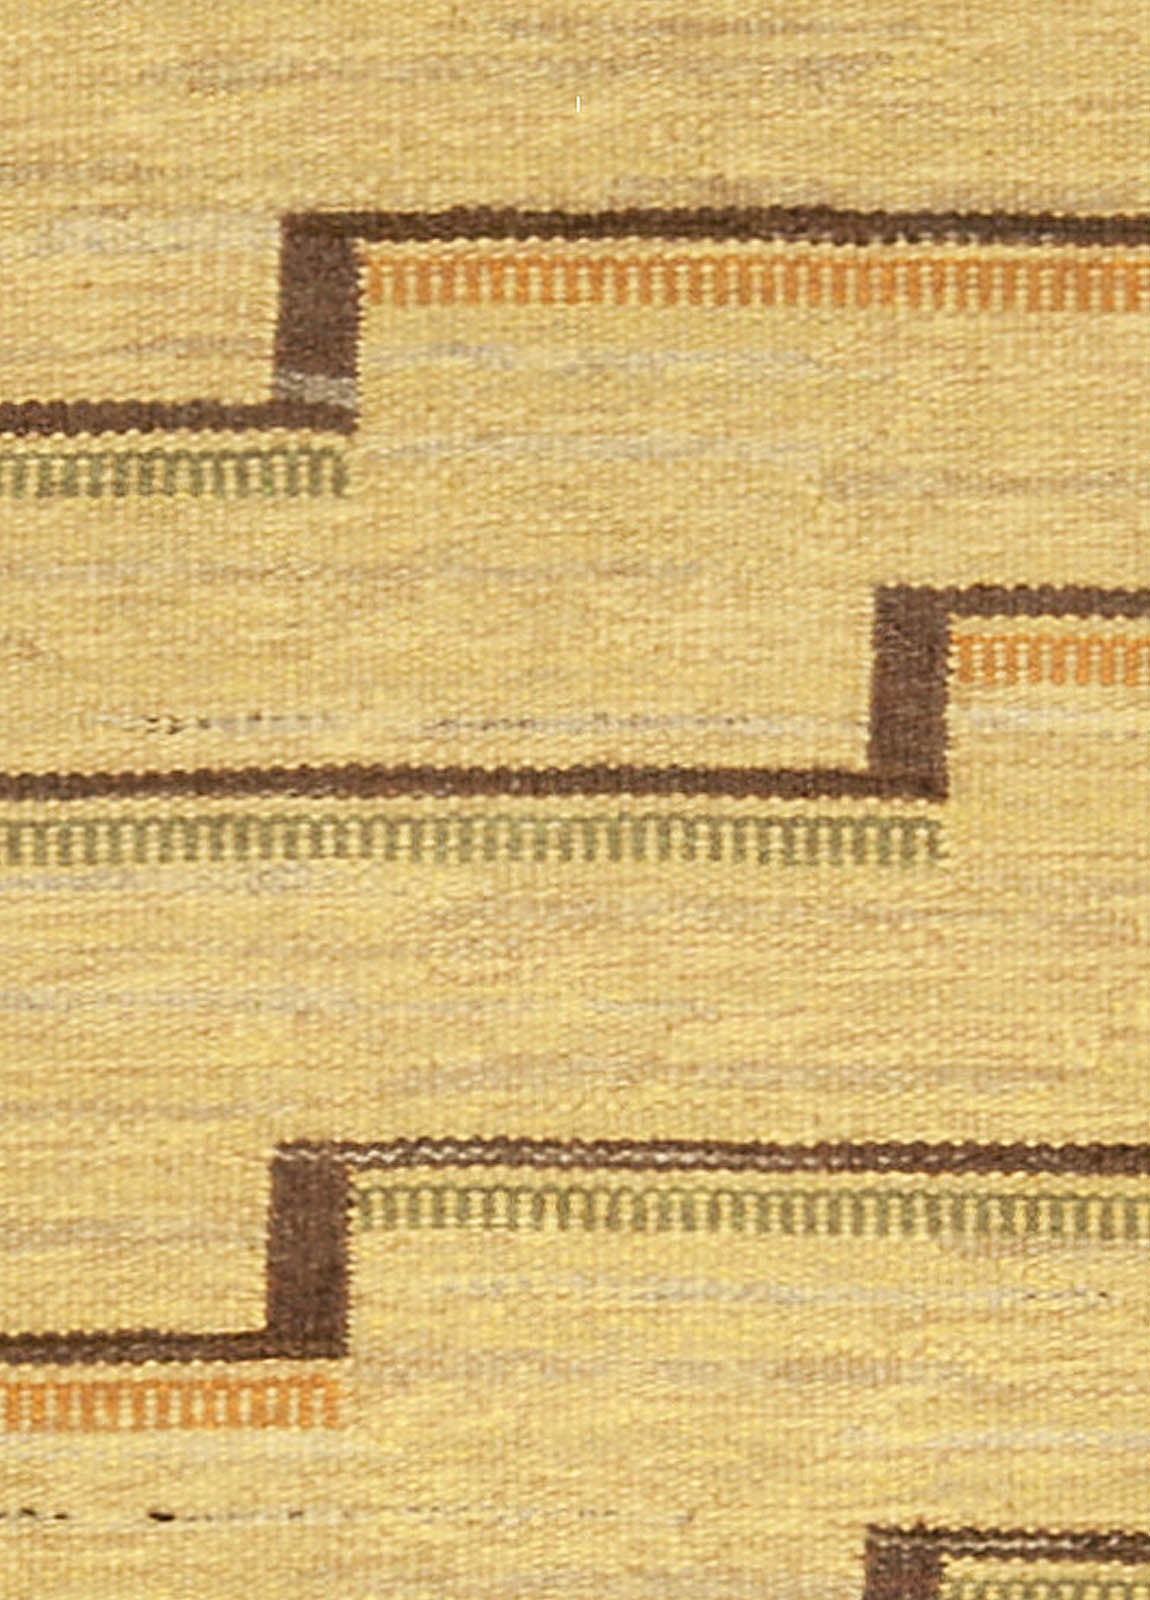 Mid-20th century Swedish flat-weave rug by Doris Leslie Blau
Size: 5'5